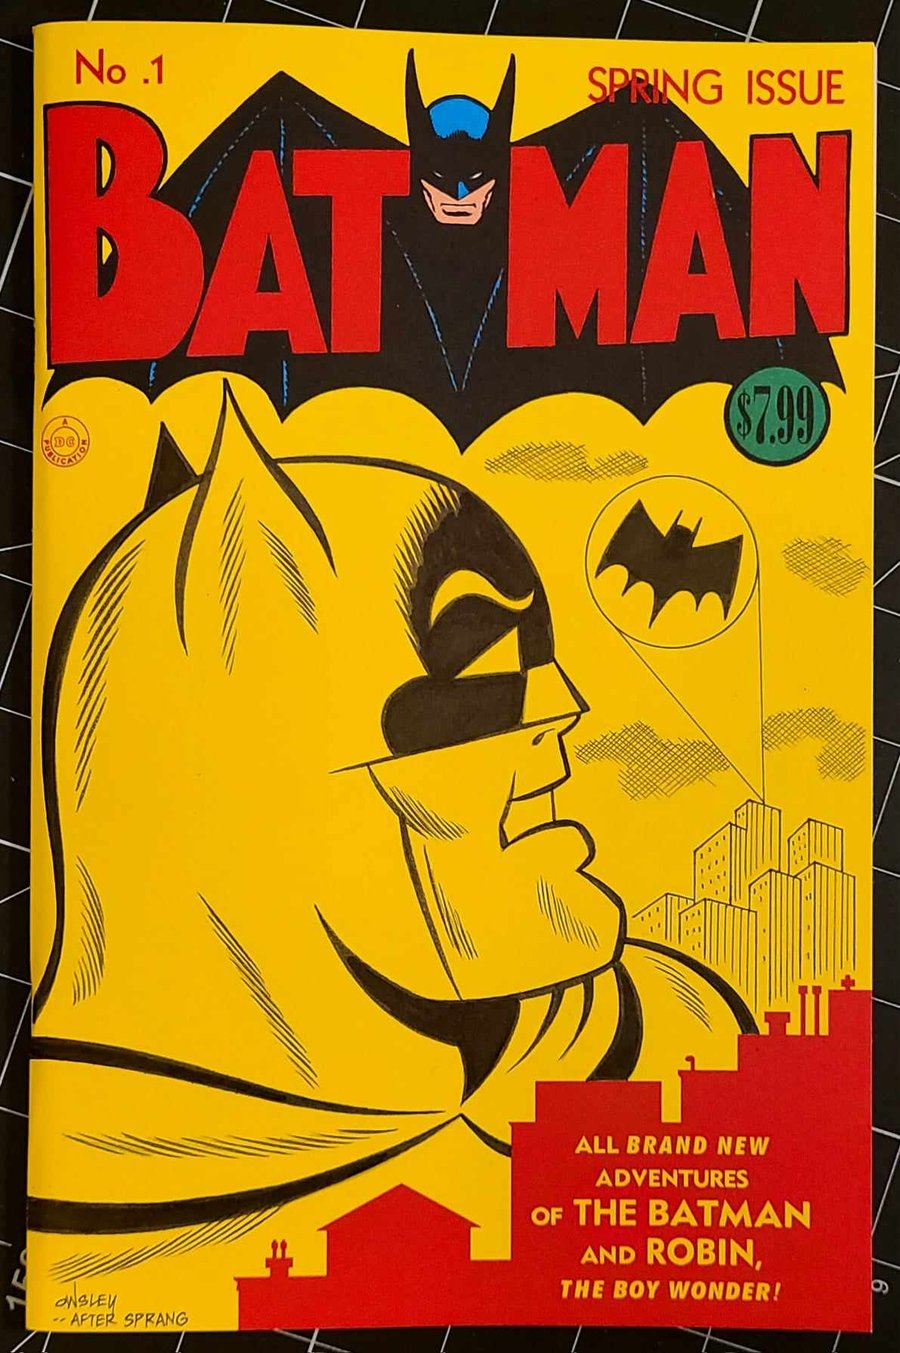 Image of CALLING BATMAN! BATMAN #1 ORIGINAL ART SKETCH COVER!